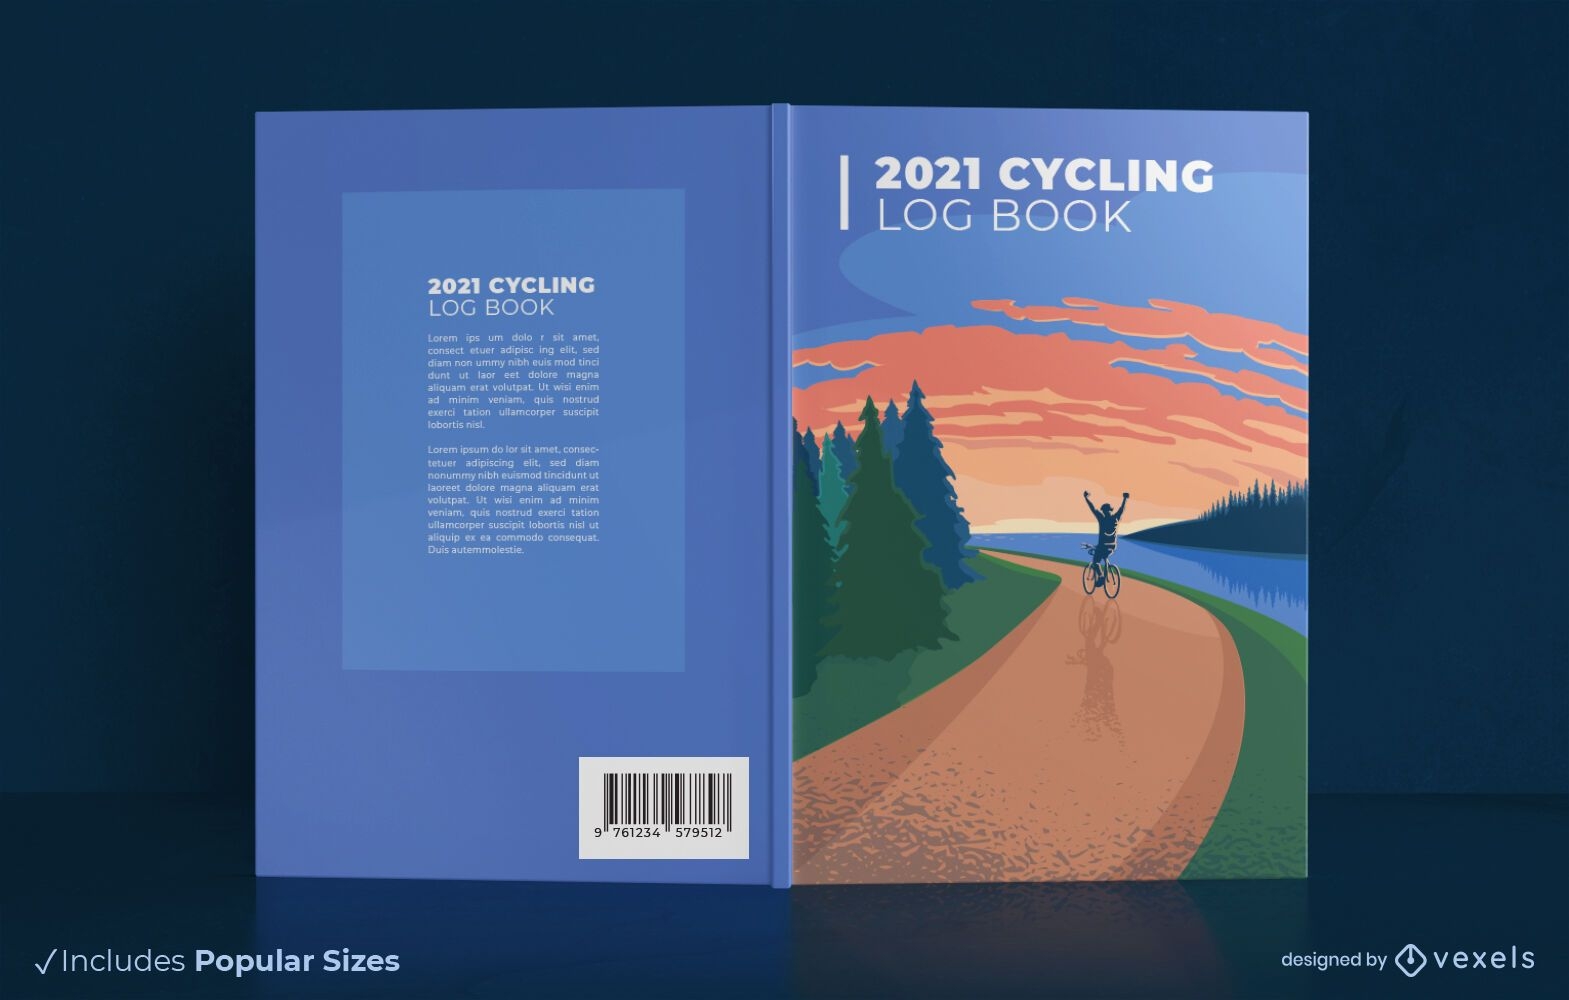 Dise?o de portada de libro de registro de ciclismo 2021